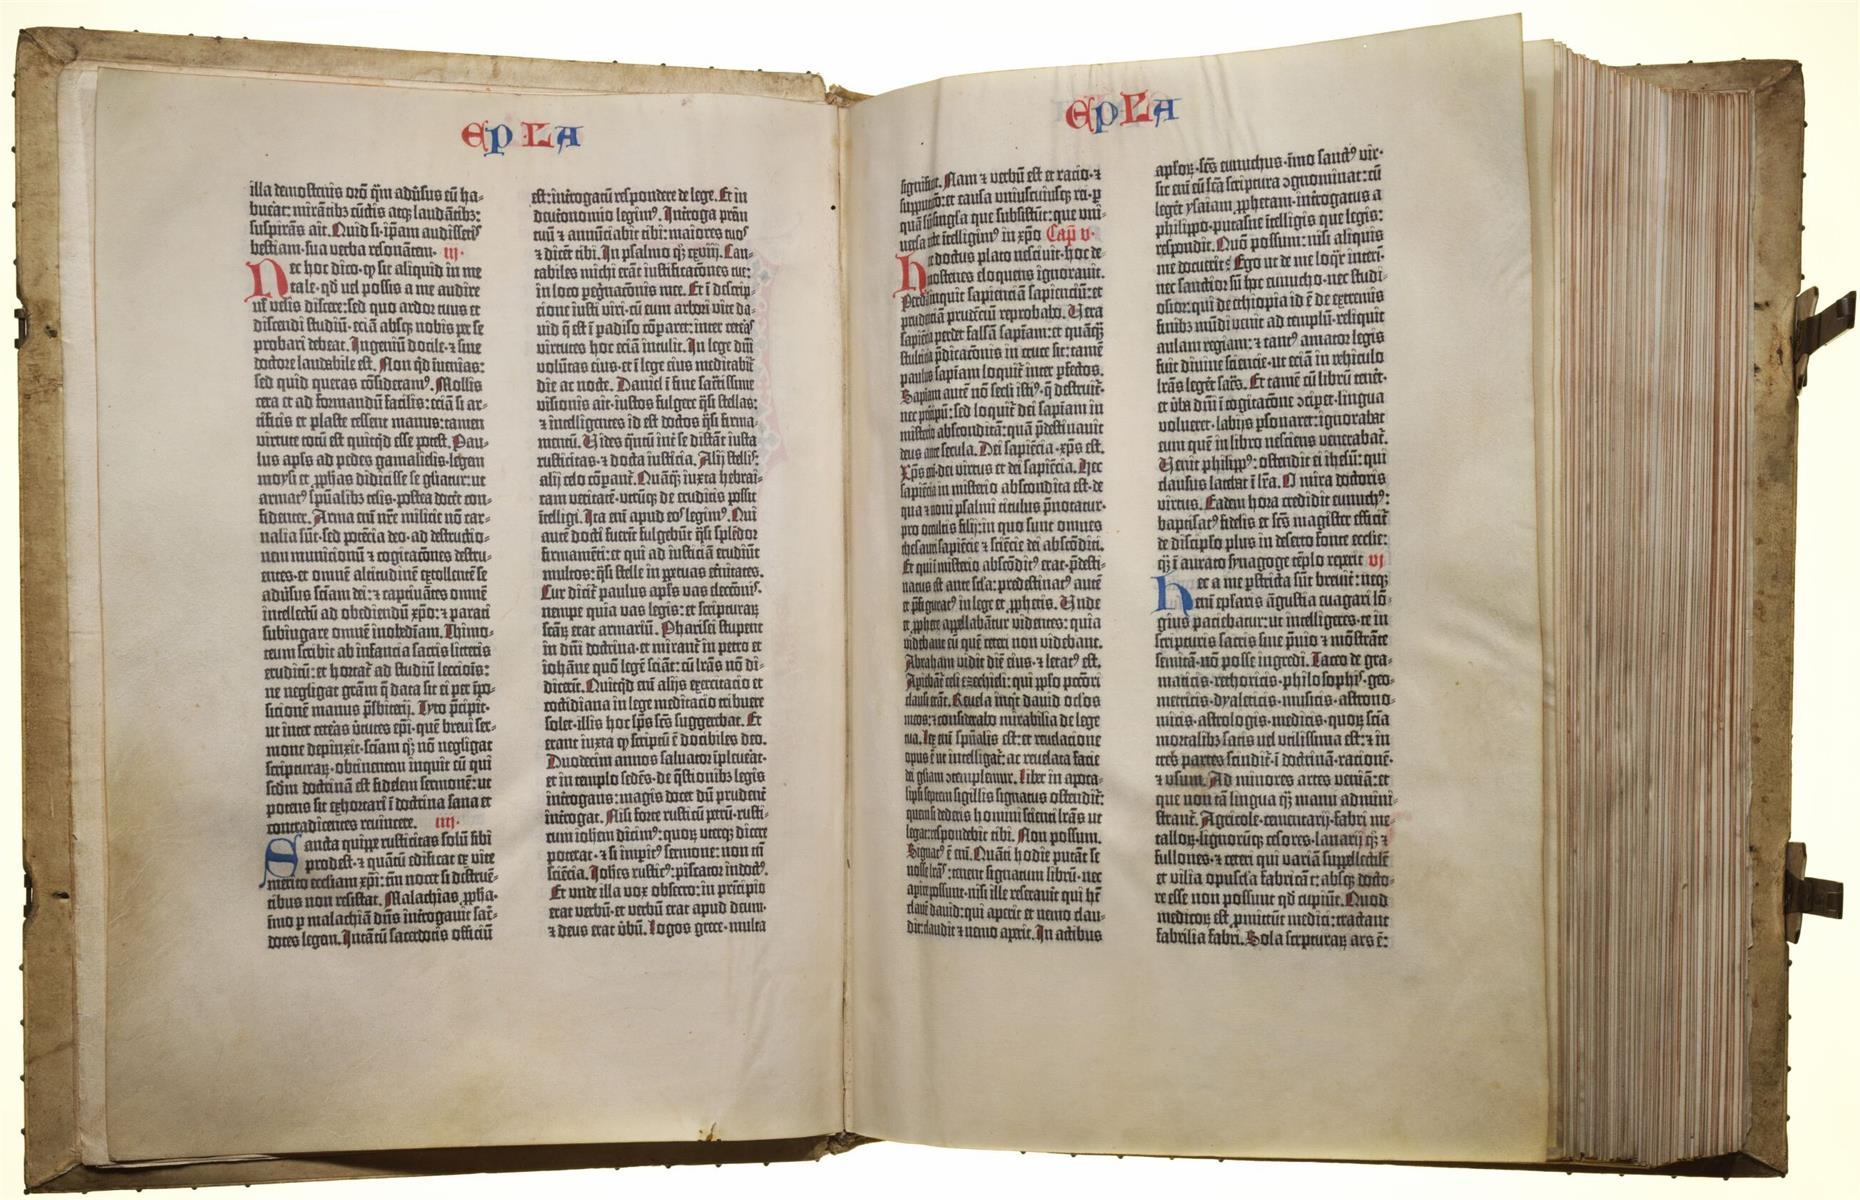 Gutenberg Bible: $35 million (£27m)